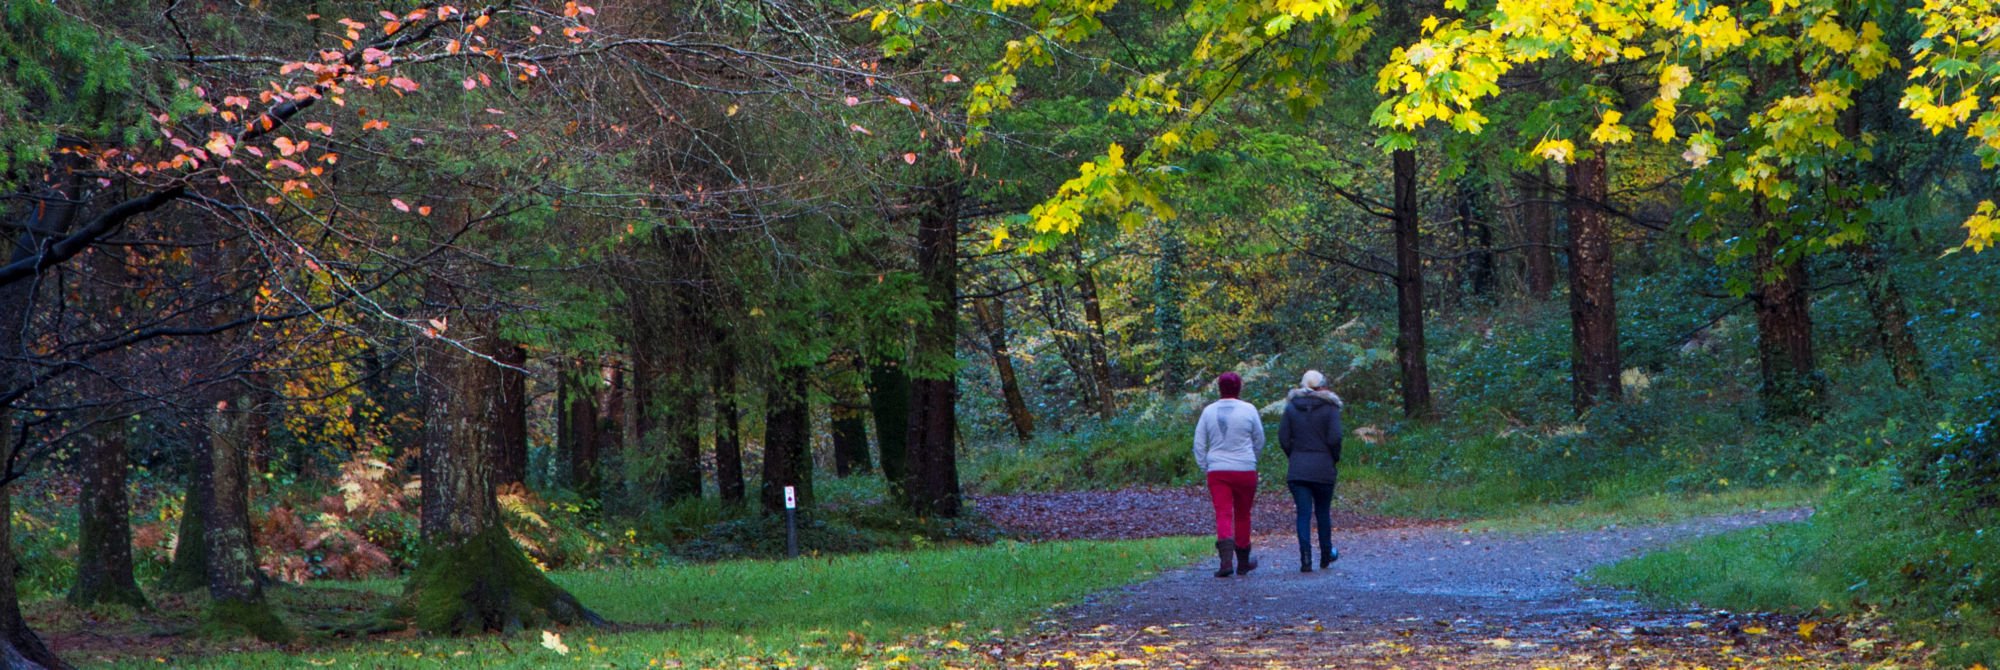 West Waterford  Irelands Greatest Nature Walk